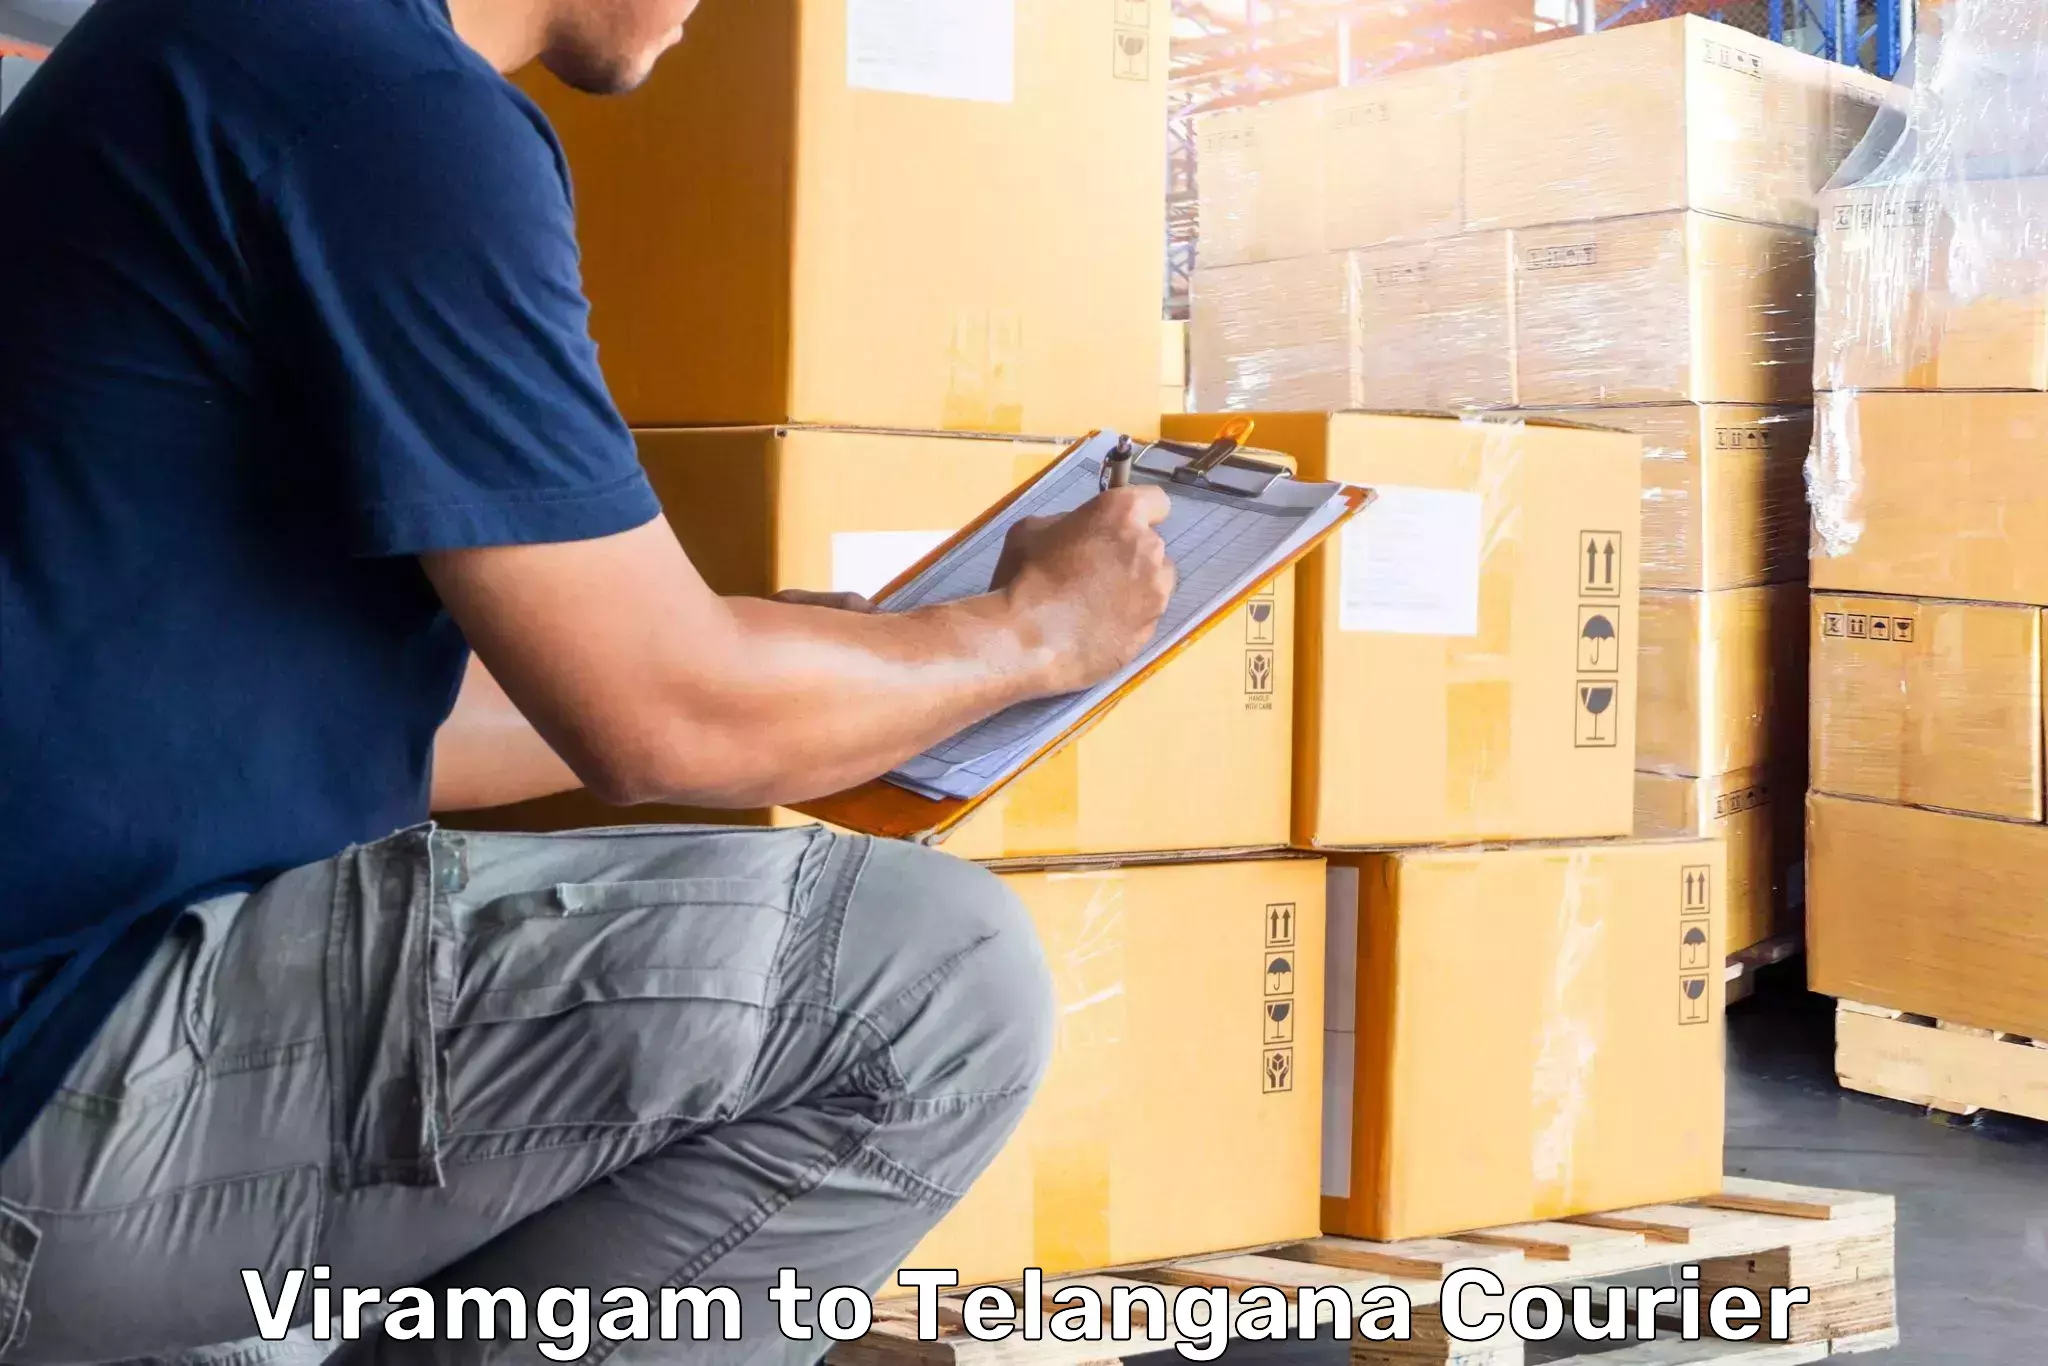 Luggage shipment tracking in Viramgam to Narayanpet